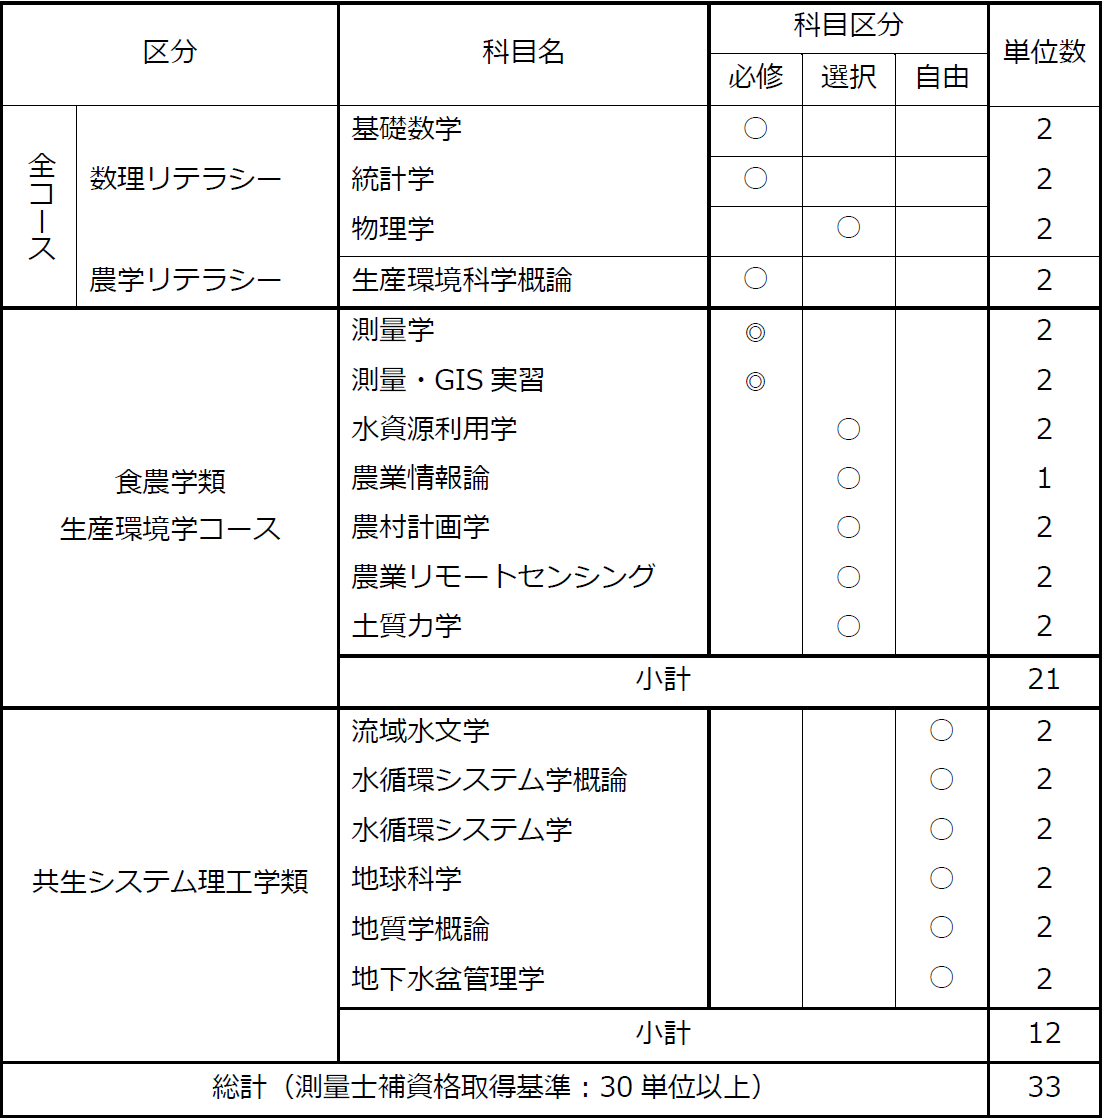 http://kyoumu.adb.fukushima-u.ac.jp/guide/2020/agri/Files/2020/02/%E6%B8%AC%E9%87%8F%E5%A3%AB%E8%A3%9C%E3%80%80%E8%A1%A8.png